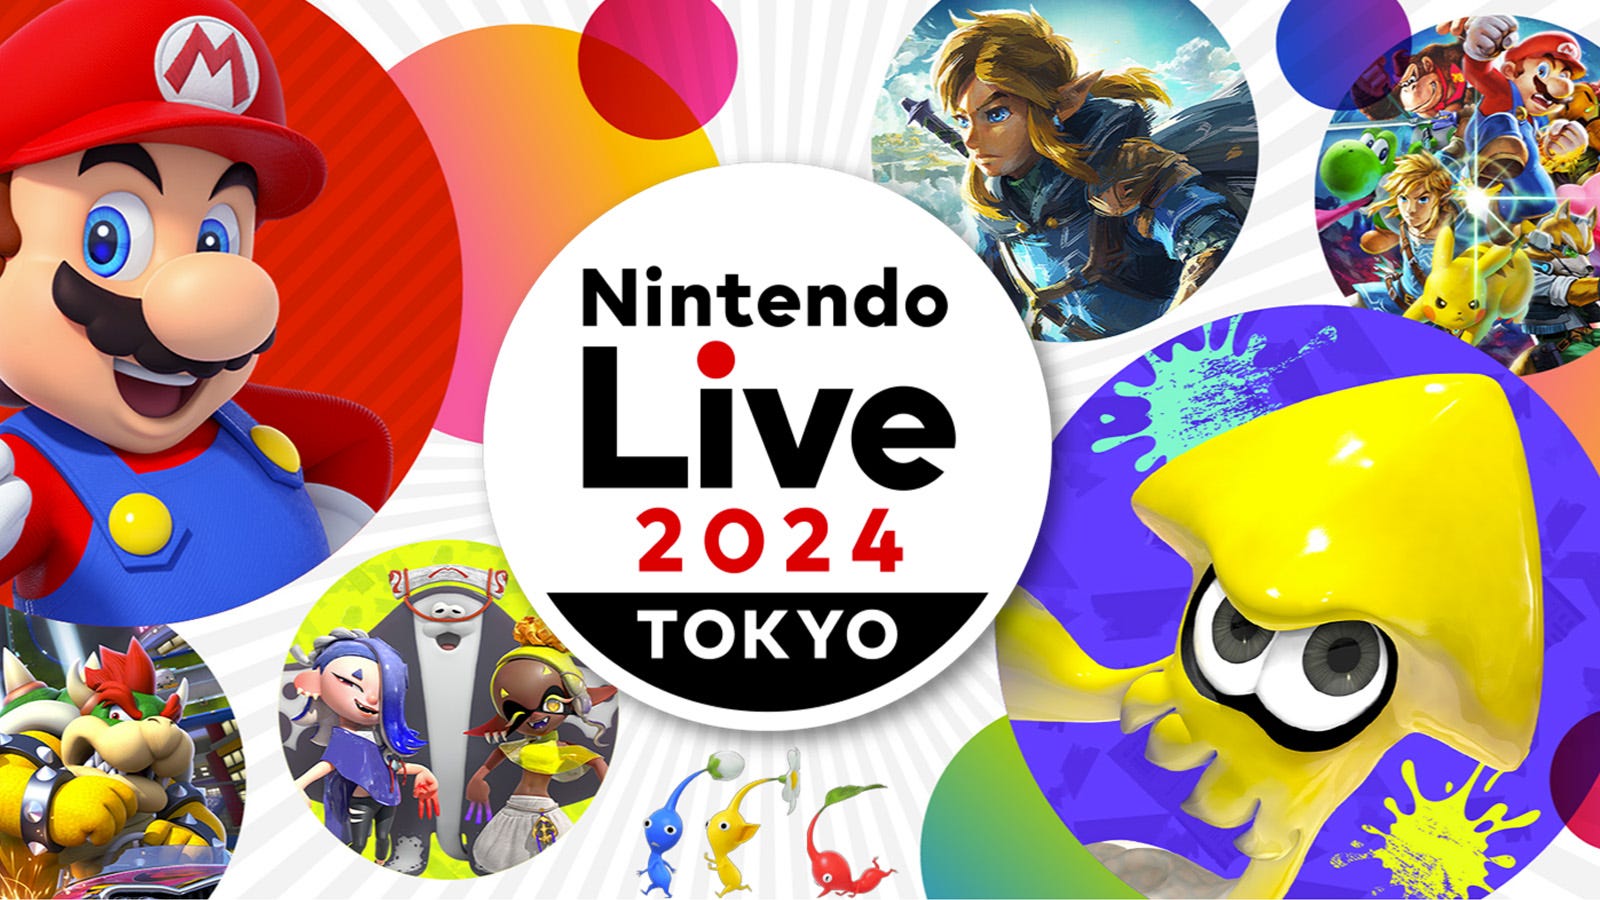 Nintendo Live 2024 東京イベント、スタッフへの脅迫を受けて中止